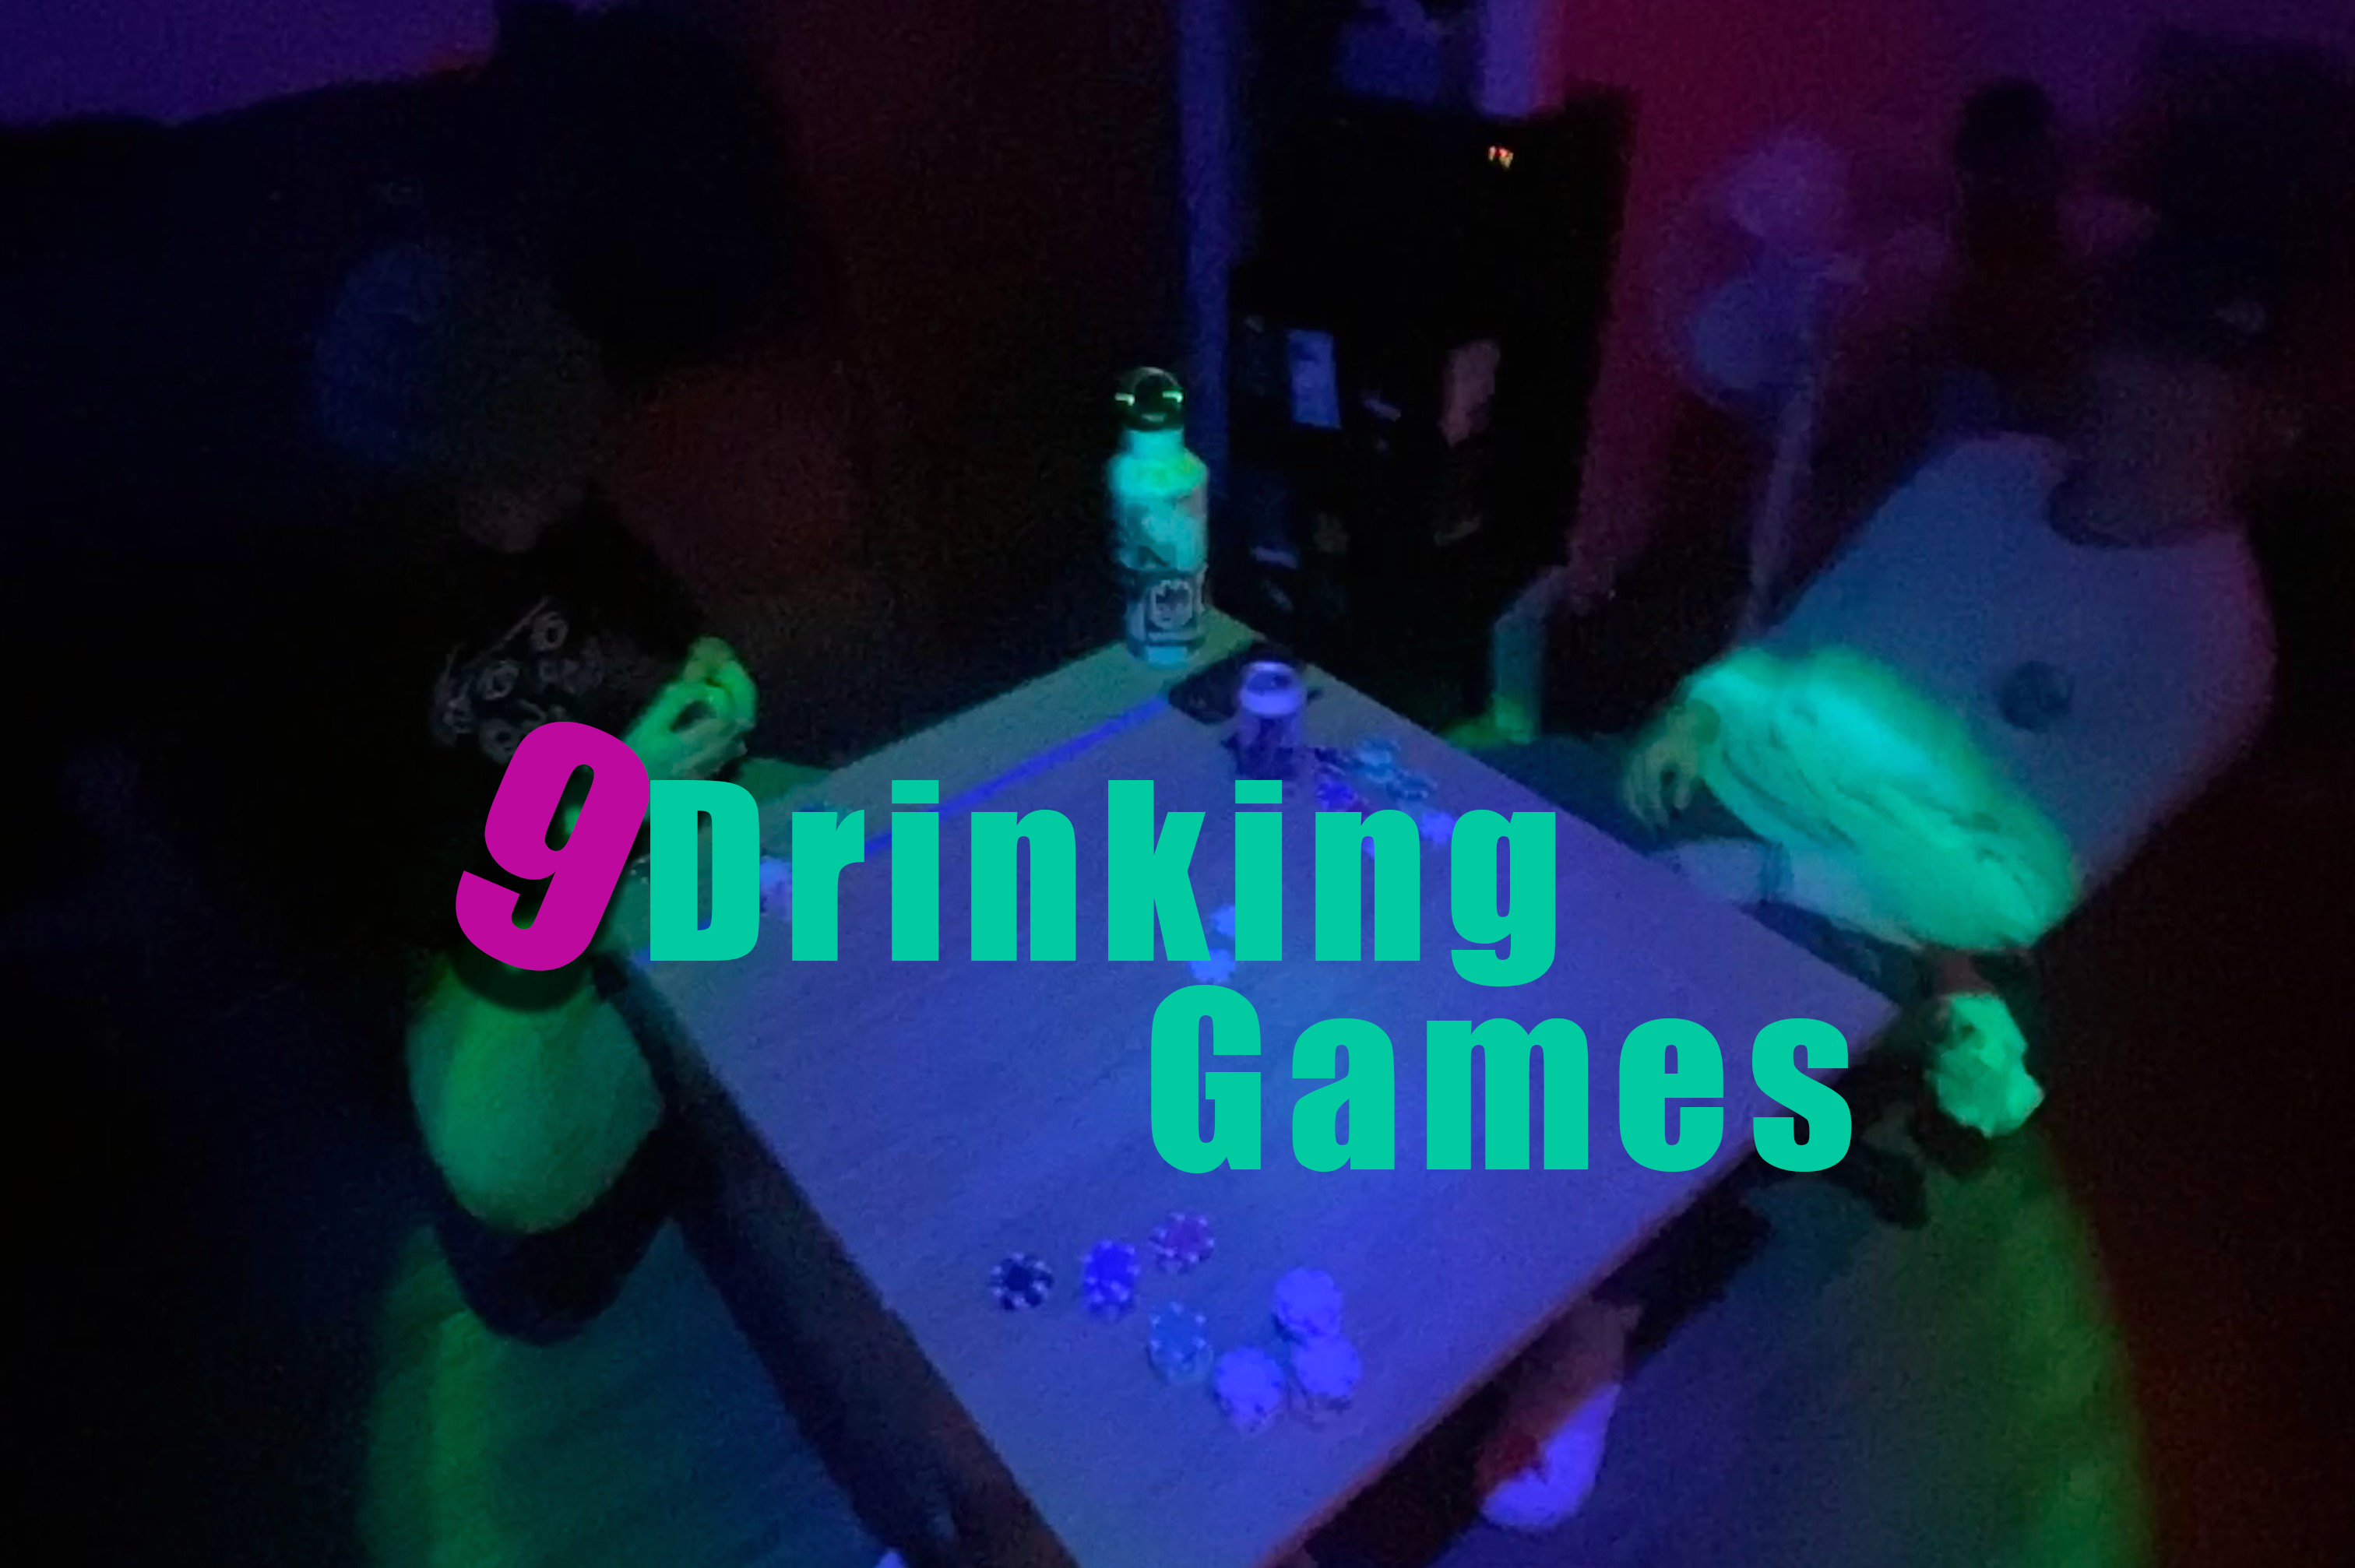 Illustration: 9 Drinking Game